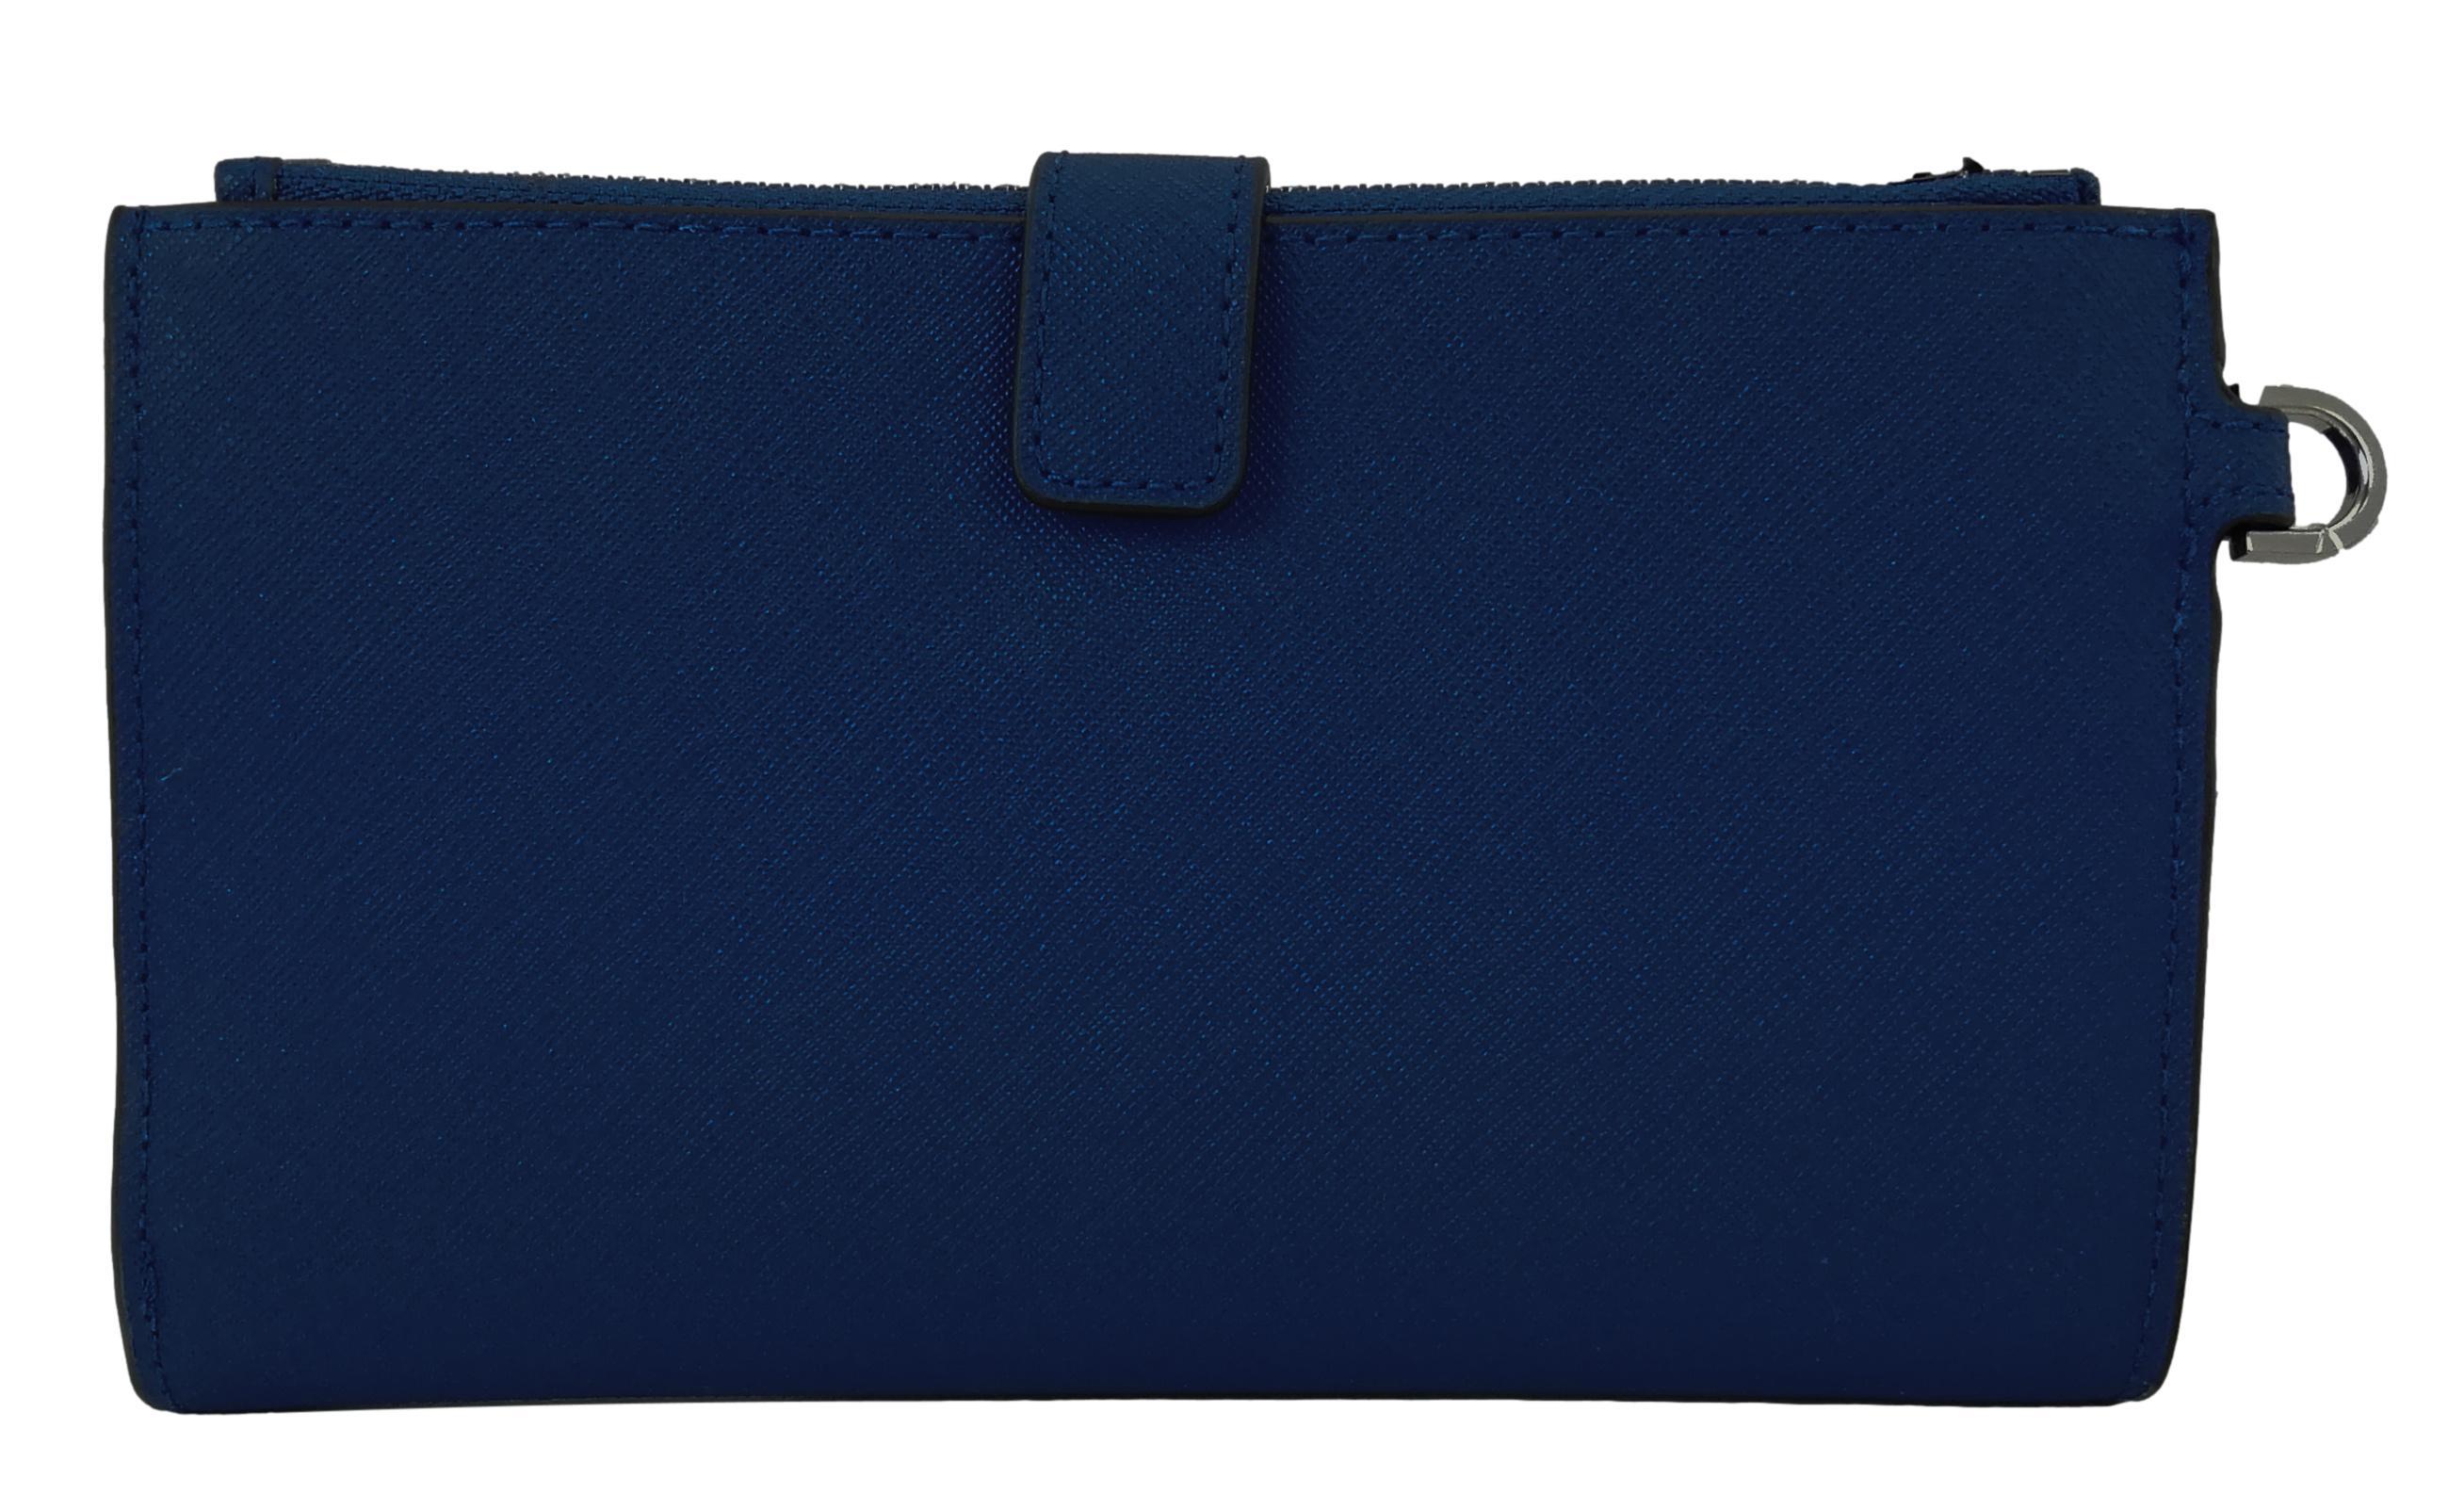 Michael Kors Large Riley Handbag Light Blue Pebble Leather $348 | eBay